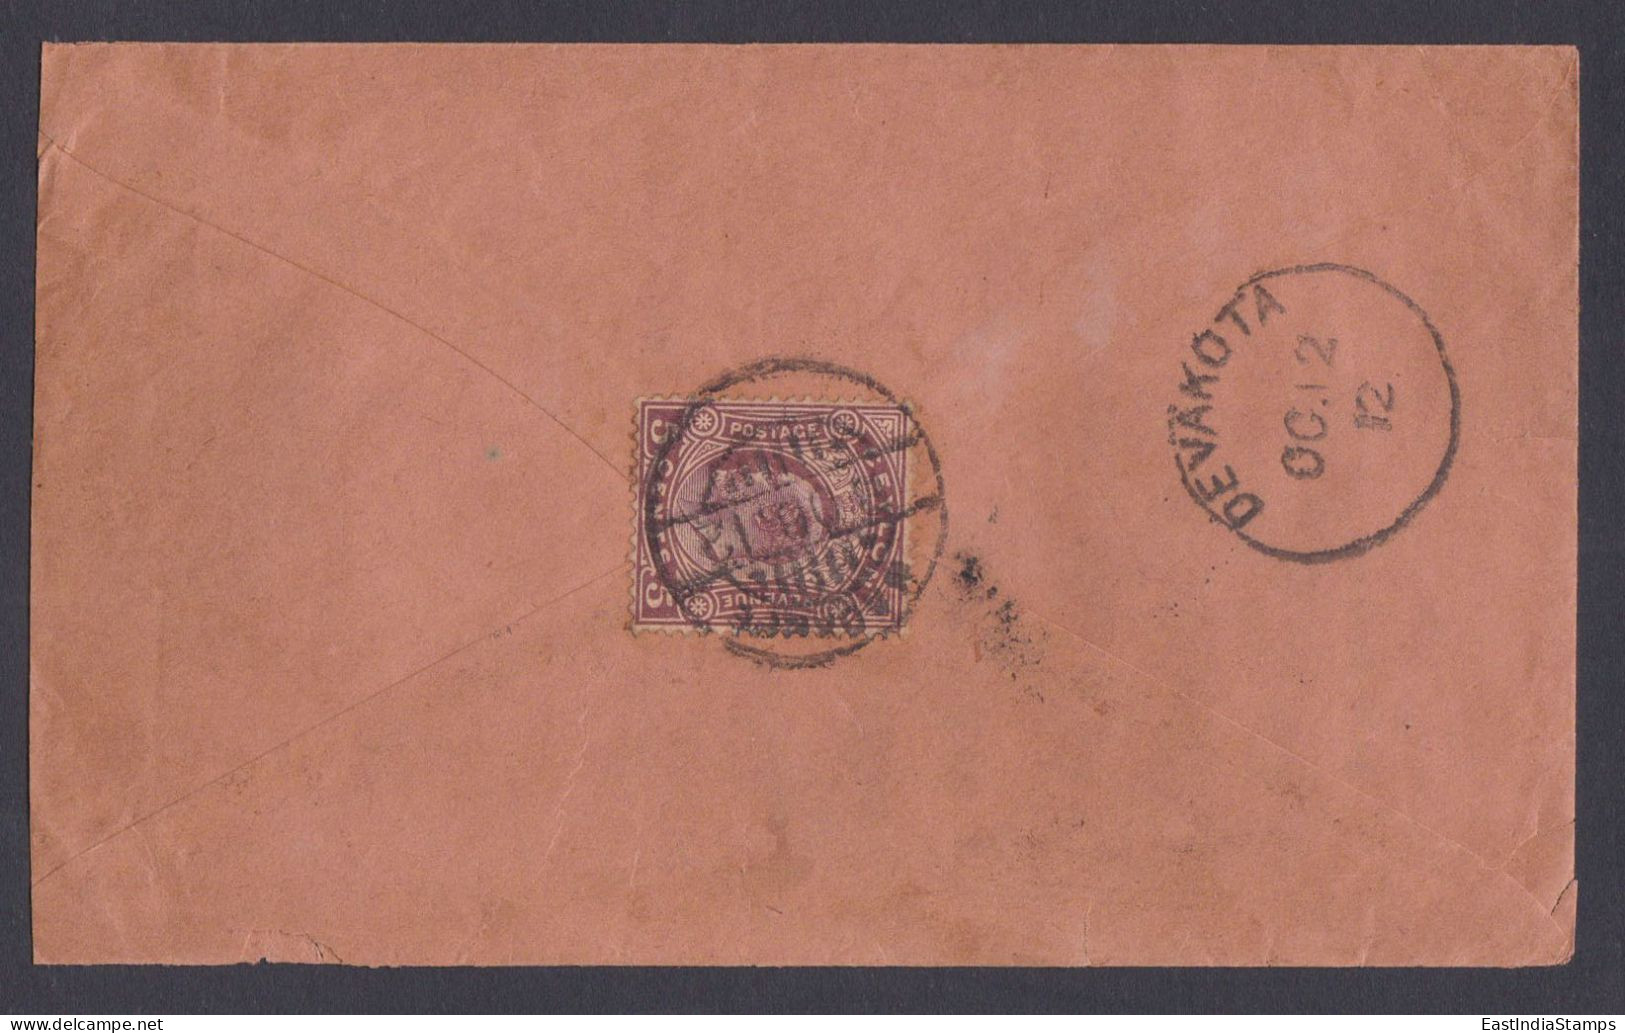 Sri Lanka Ceylon 1912 Used Cover To India, King George V - Sri Lanka (Ceylon) (1948-...)